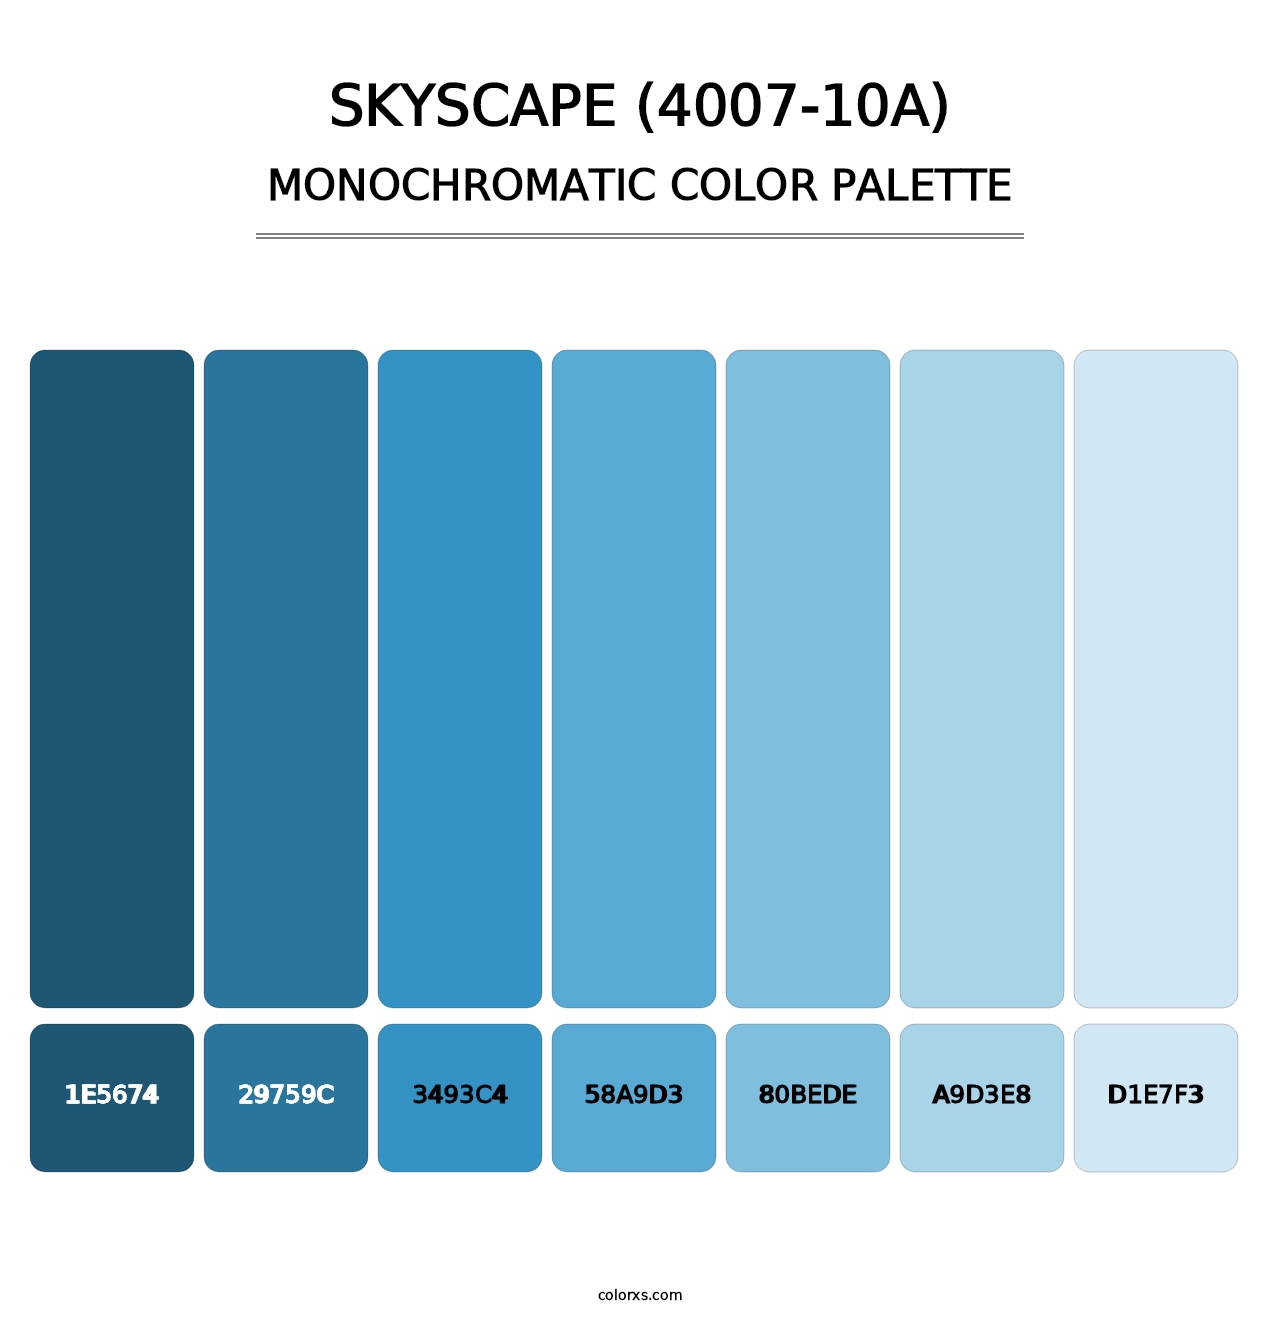 Skyscape (4007-10A) - Monochromatic Color Palette